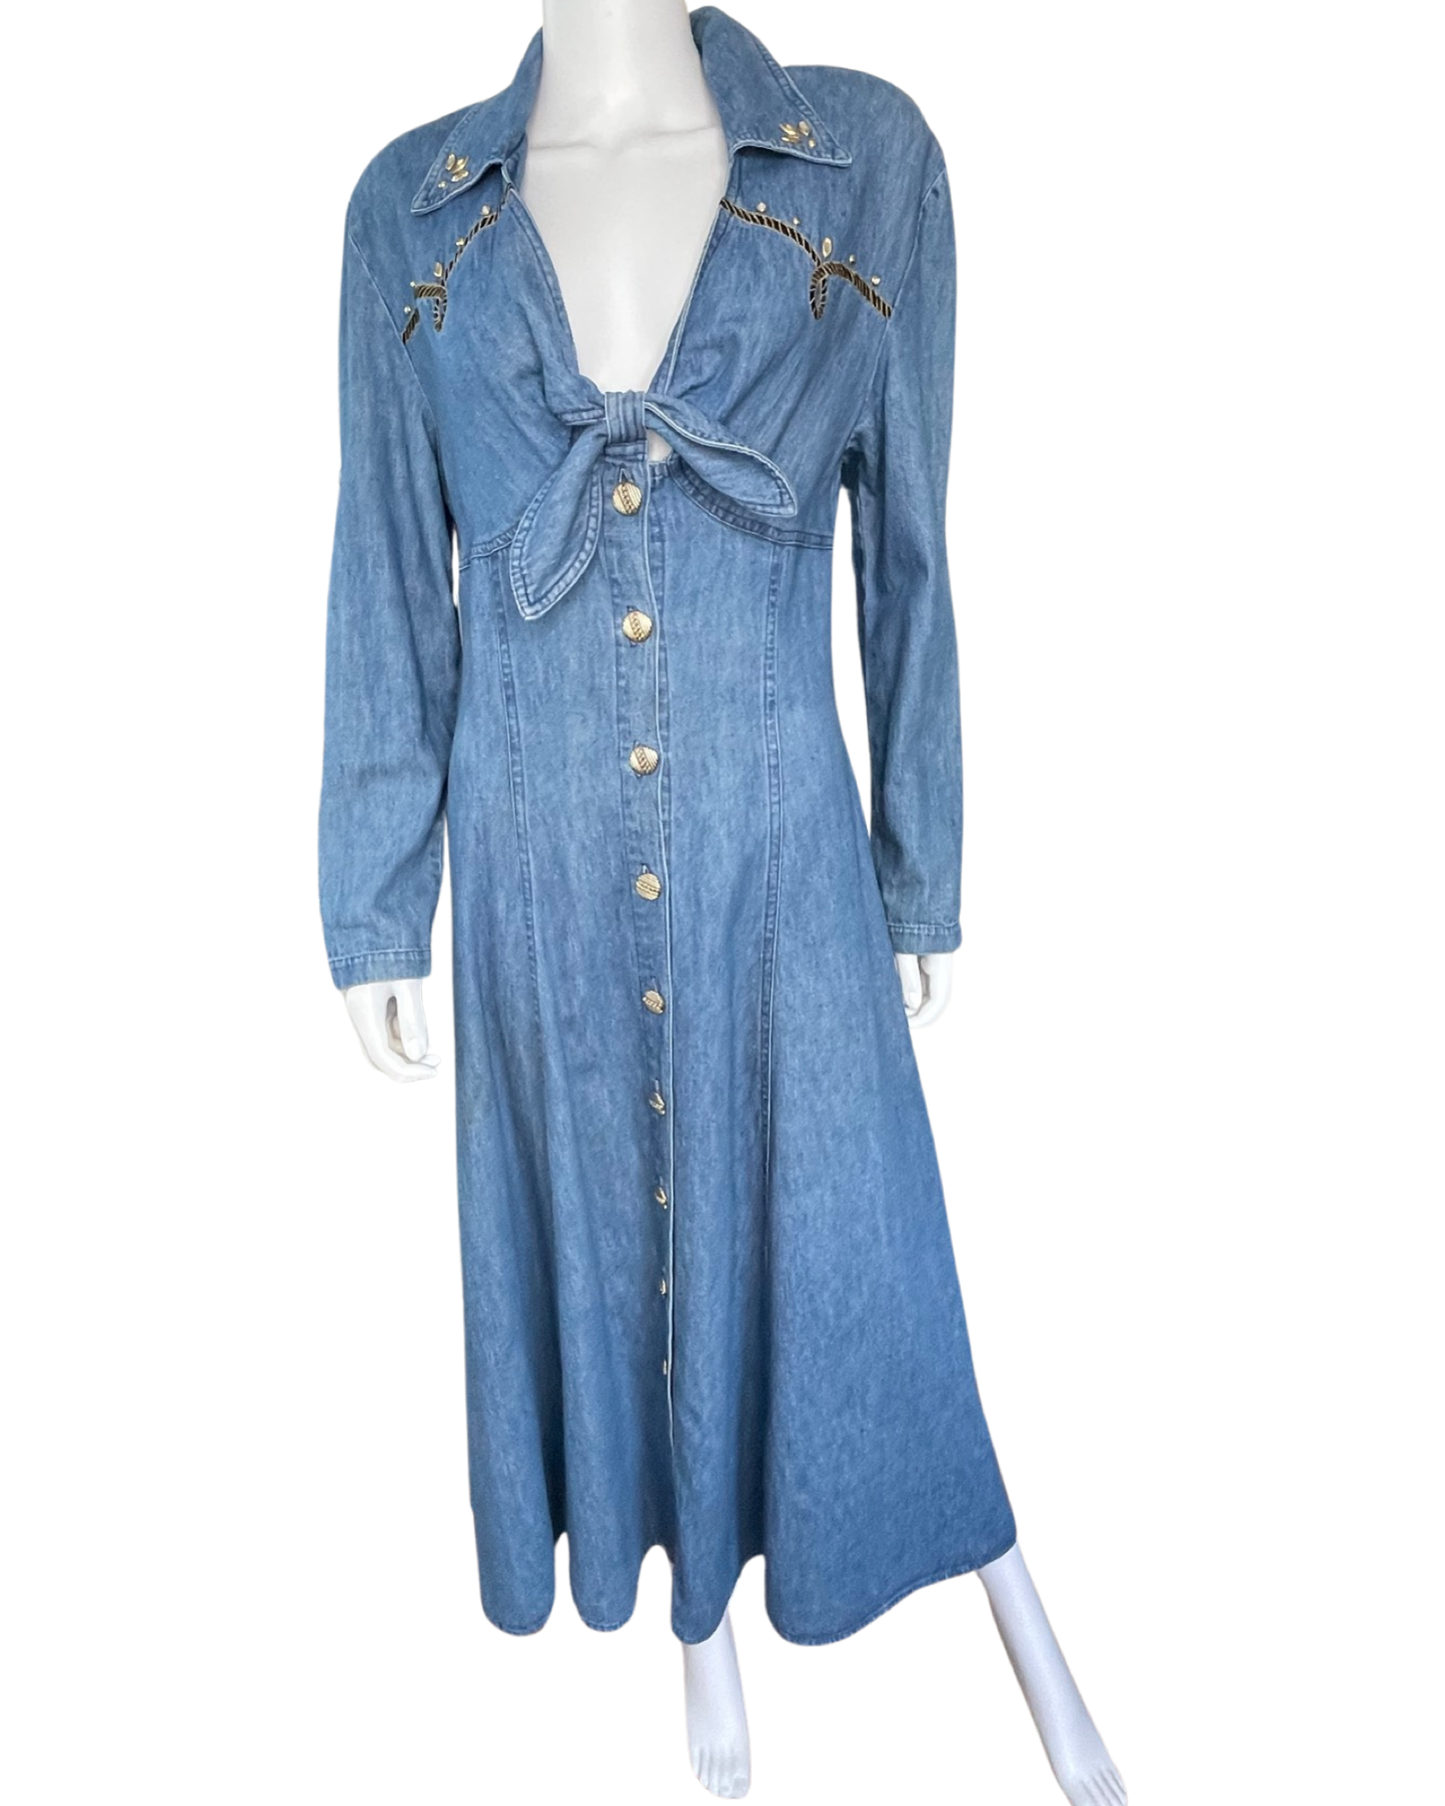 Vintage Denim Button Down Dress